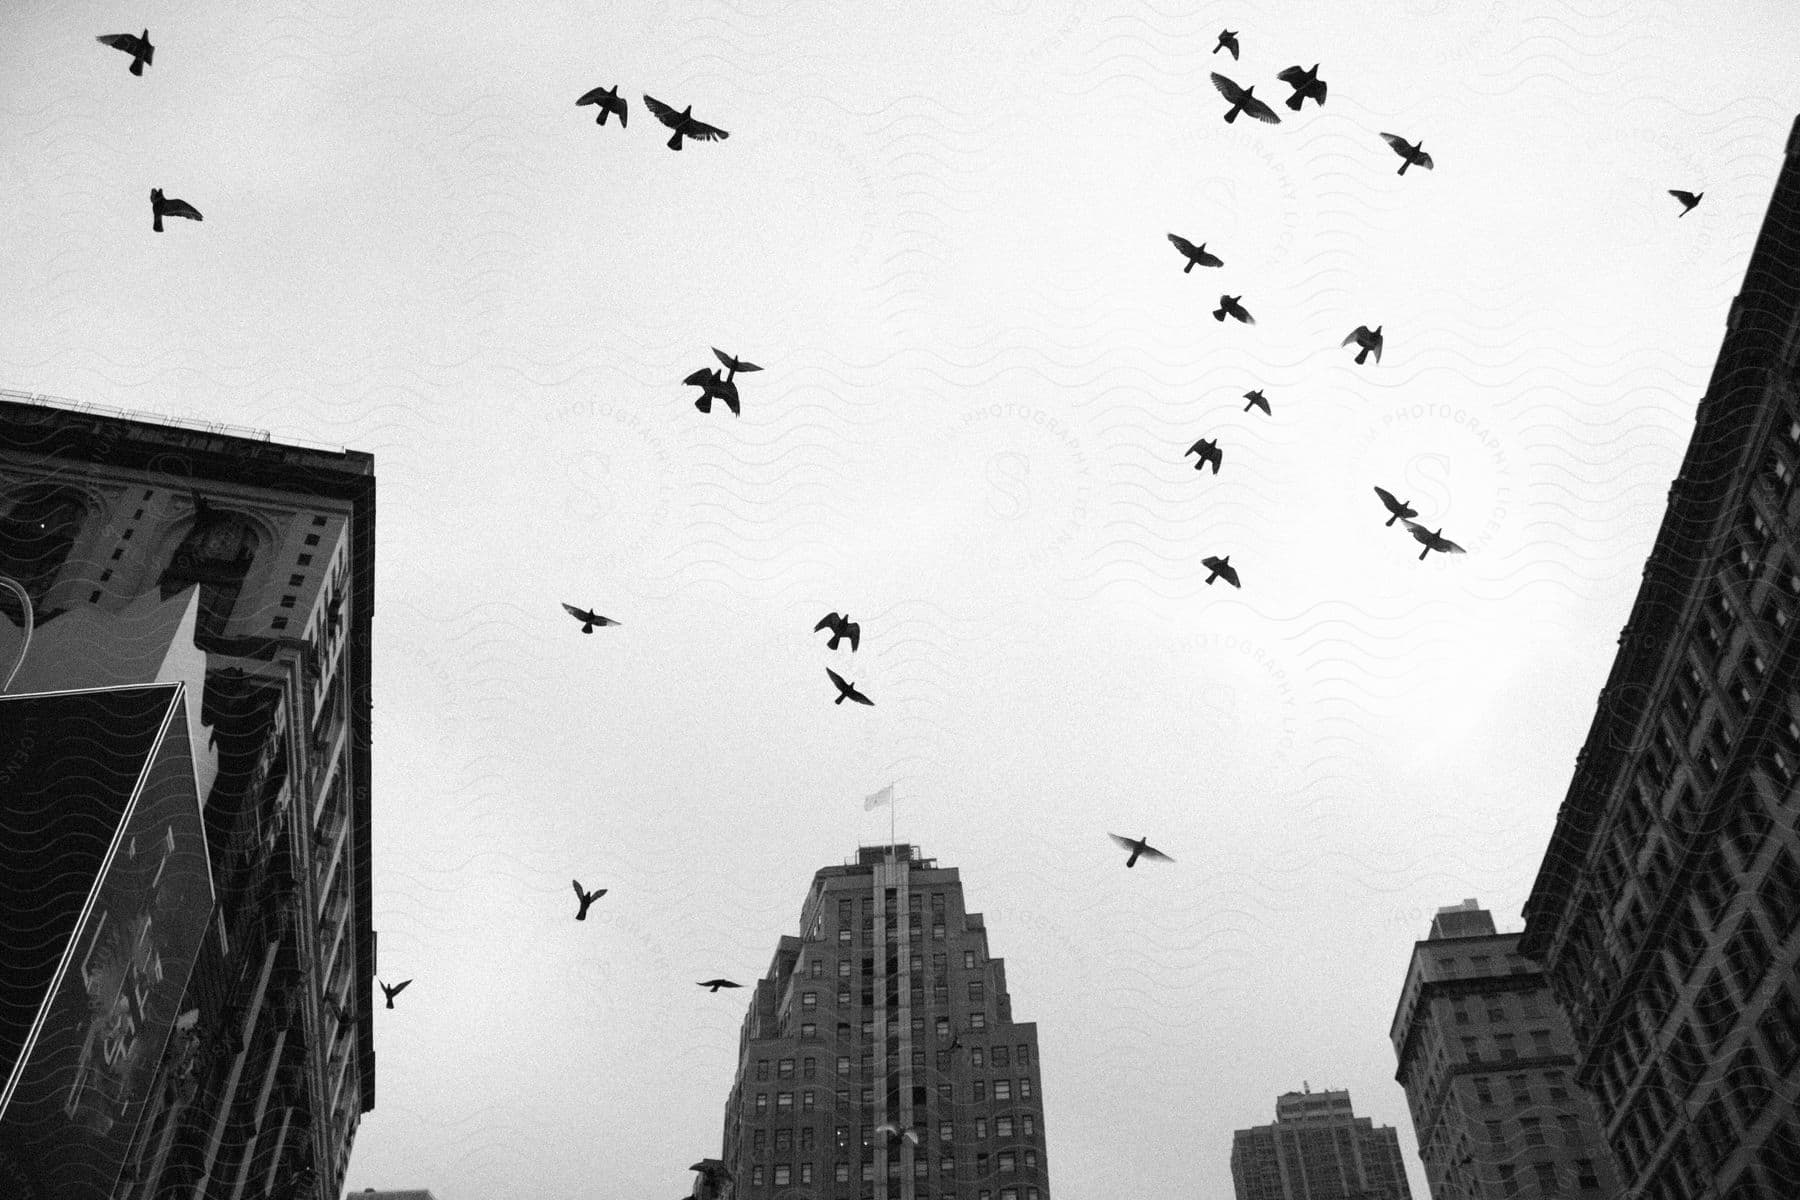 Metropolitan city skyline with birds flying over the cloudy sky.